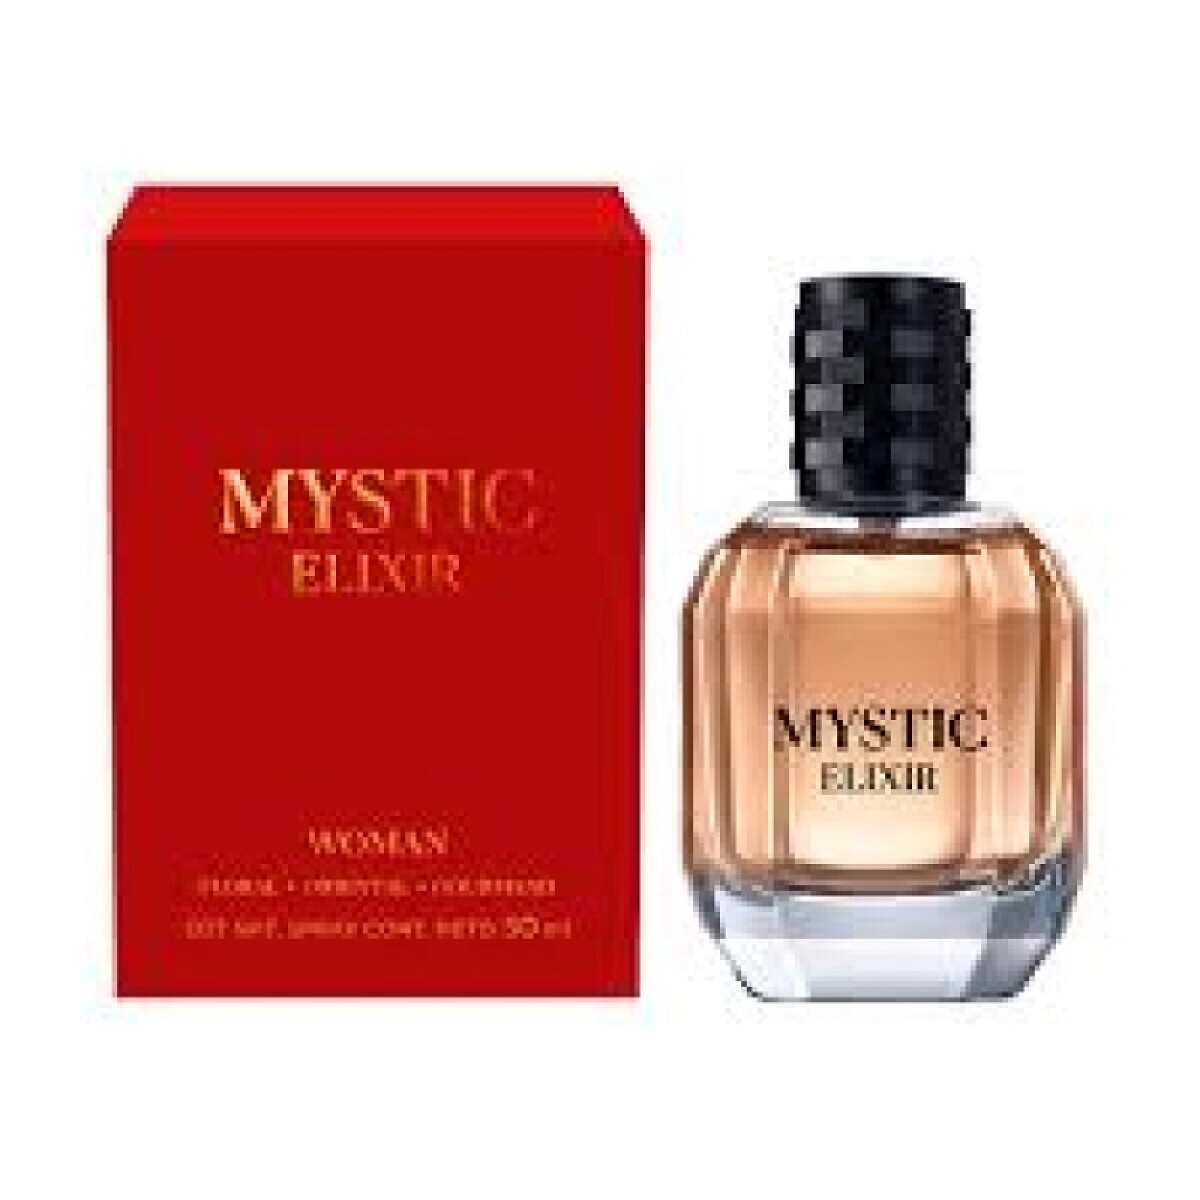 Perfume Mystic Elixir Edt 50 Ml. + Necessaire 